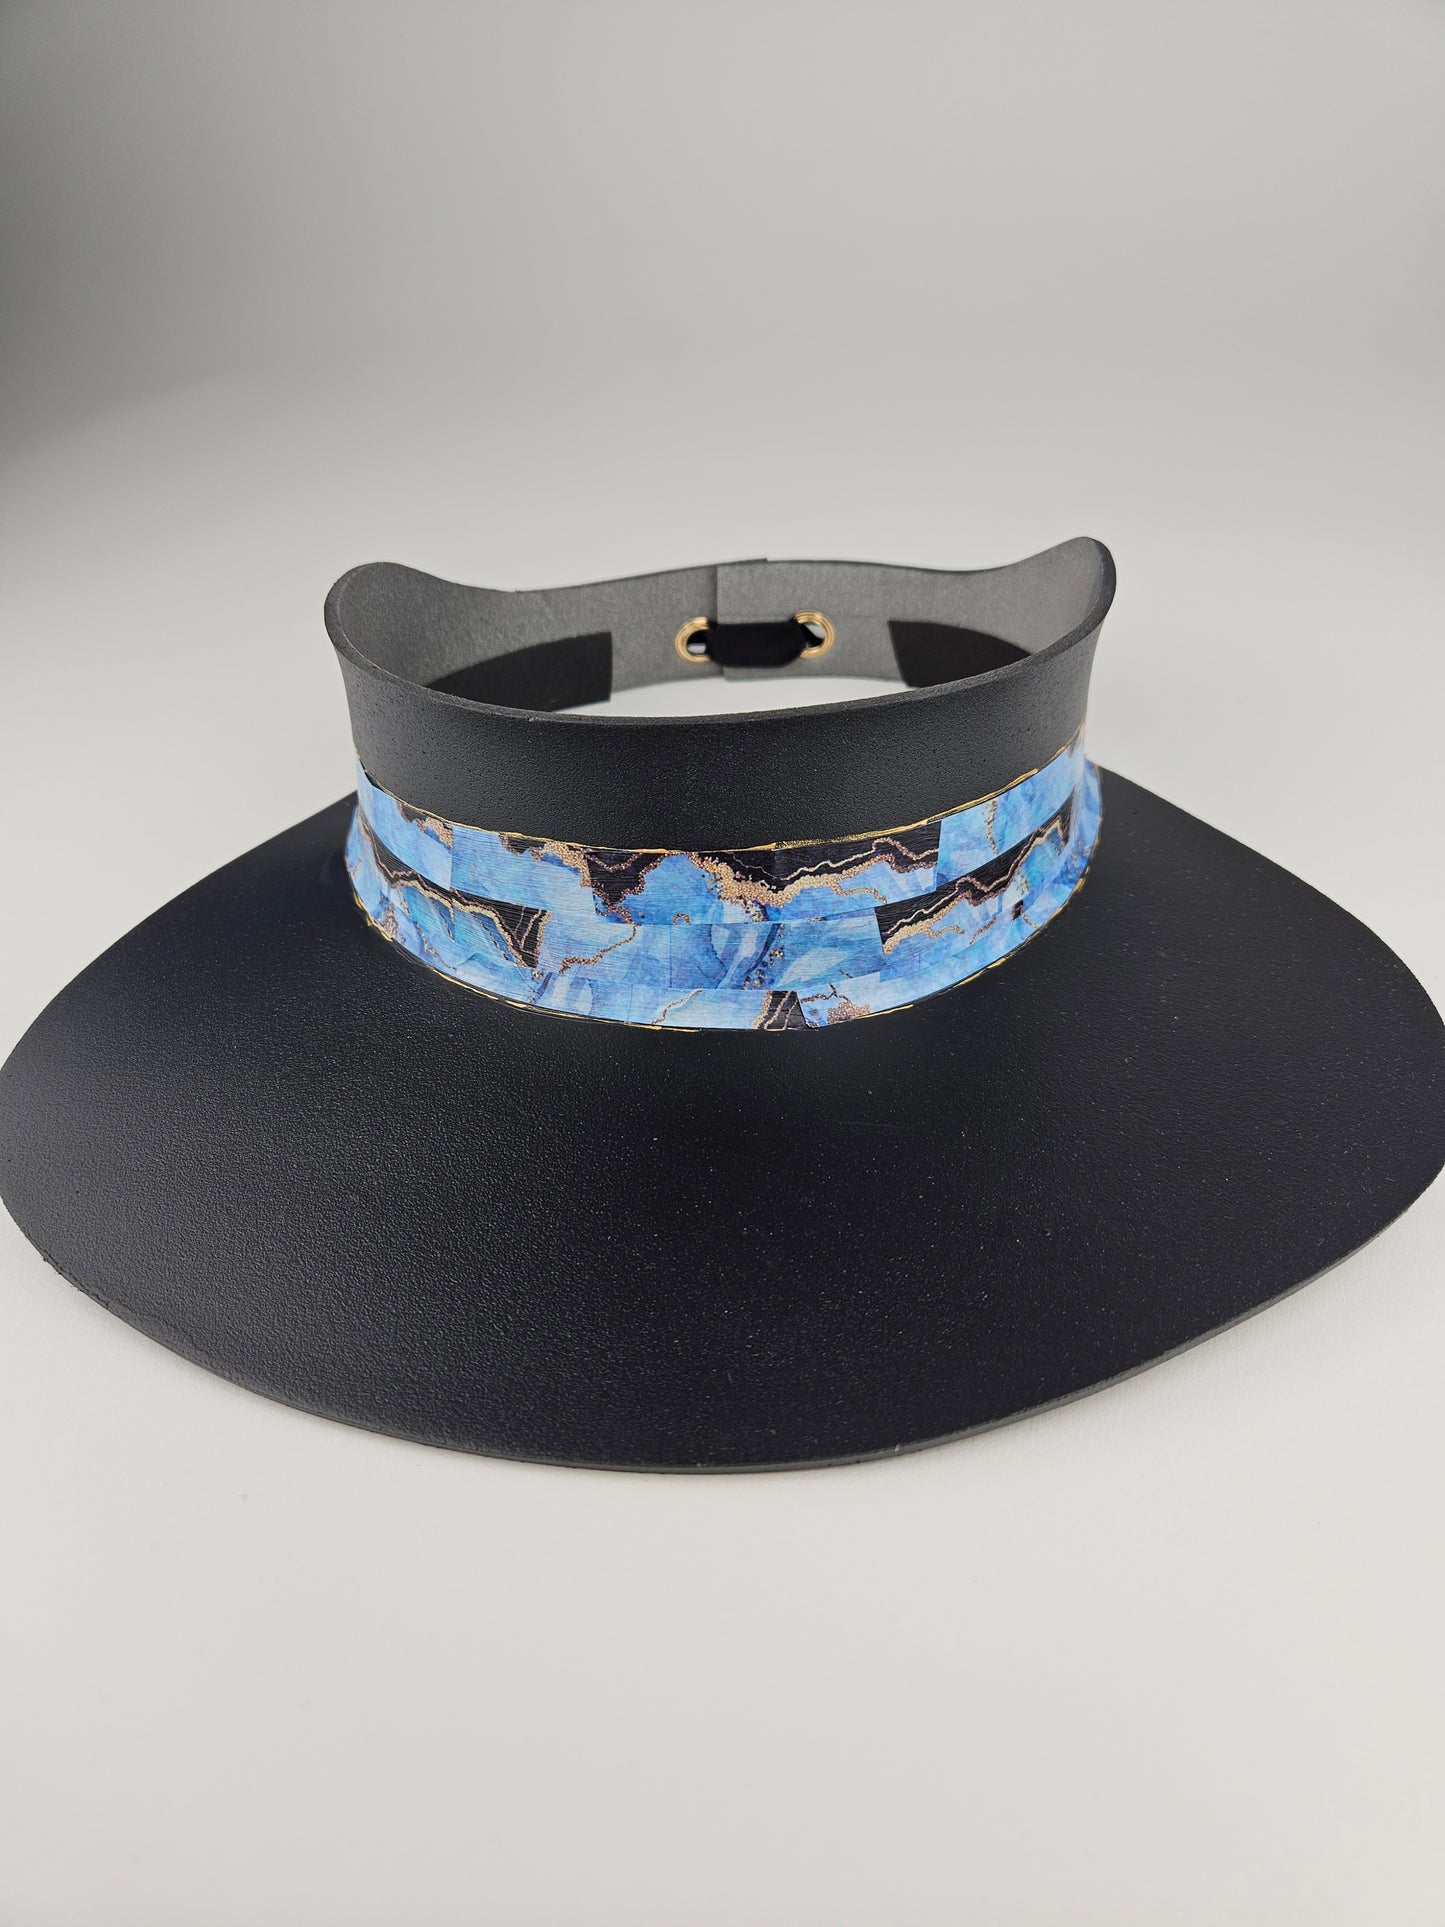 Timeless Black Audrey Foam Sun Visor Hat with Elegant Marbled Blue Band: 1920s, Walks, Brunch, Tea, Golf, Wedding, Church, No Headache, Easter, Pool, Beach